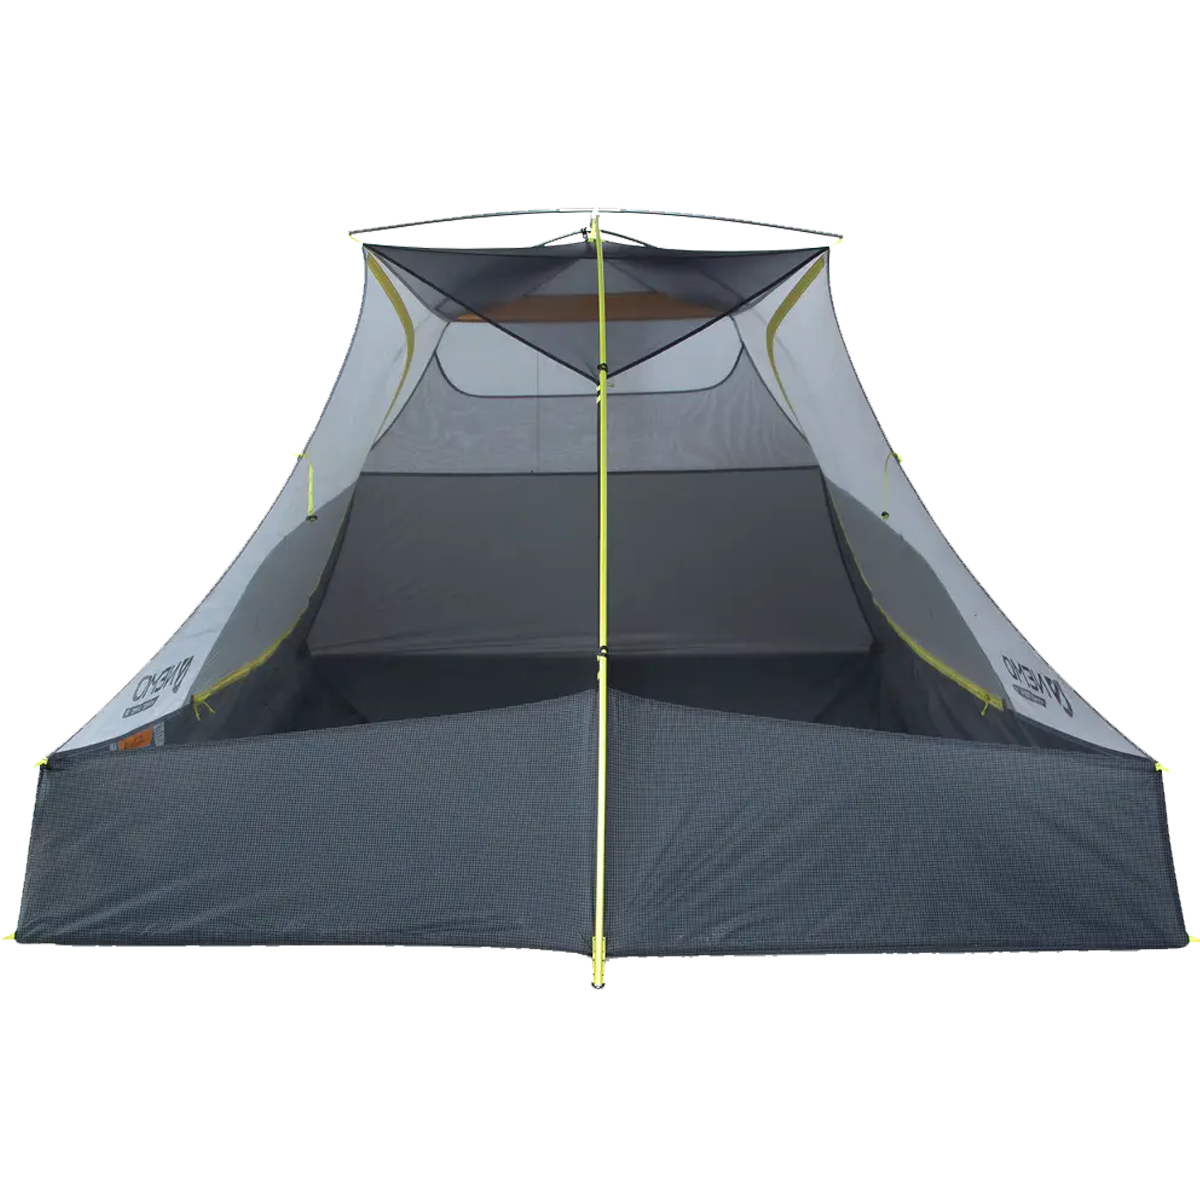 Hornet OSMO Ultralight 3 Person Tent alternate view